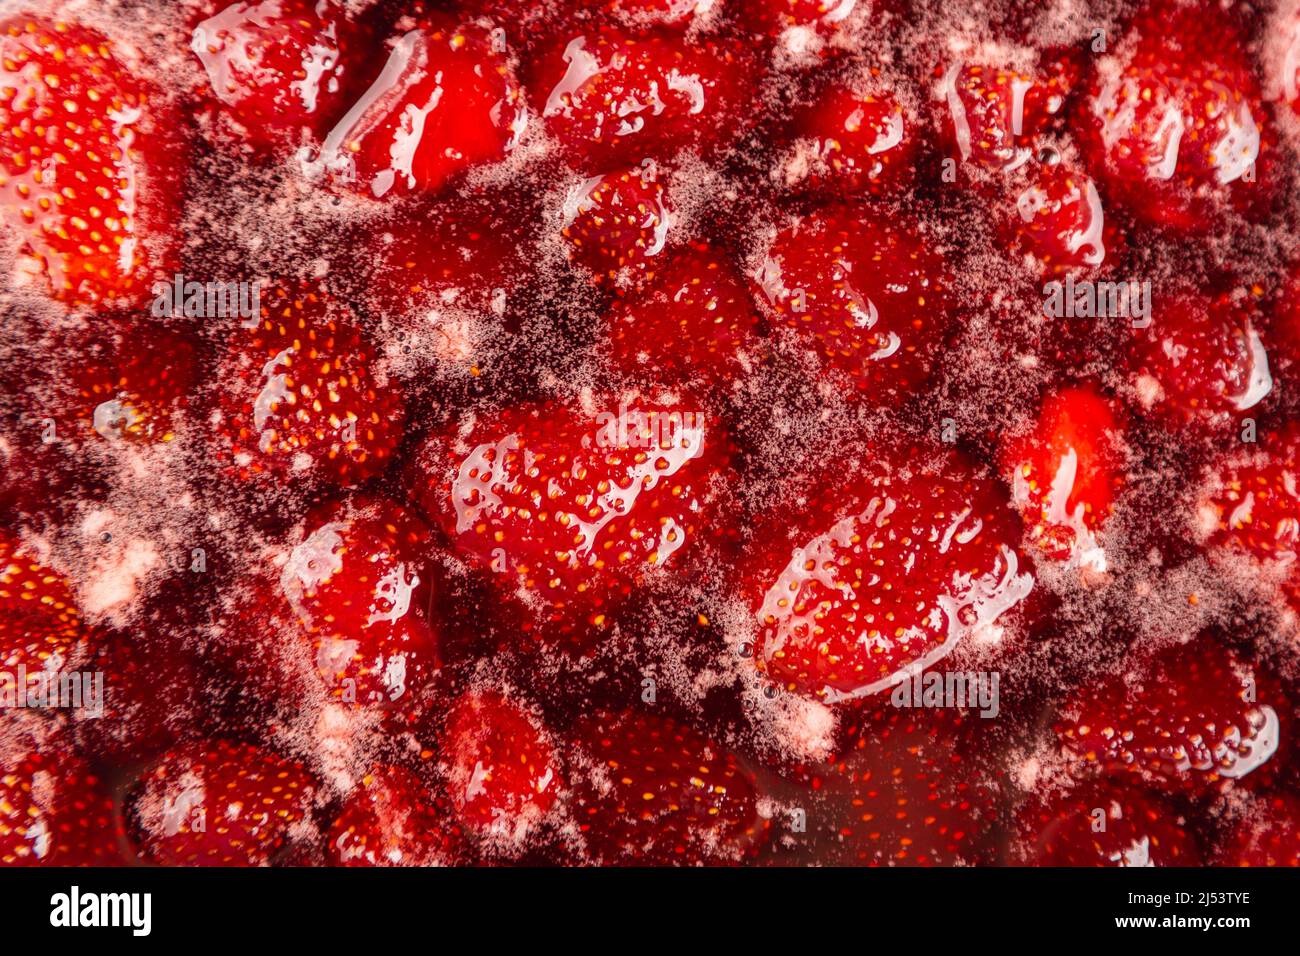 CLOSE UP: Strawberry jam. Homemade Strawberry jam in making progress boiling. Process of making homemade strawberry jam. Red sweet syrup boiling on the stove closeup. Cooking strawberry jam close up. Stock Photo